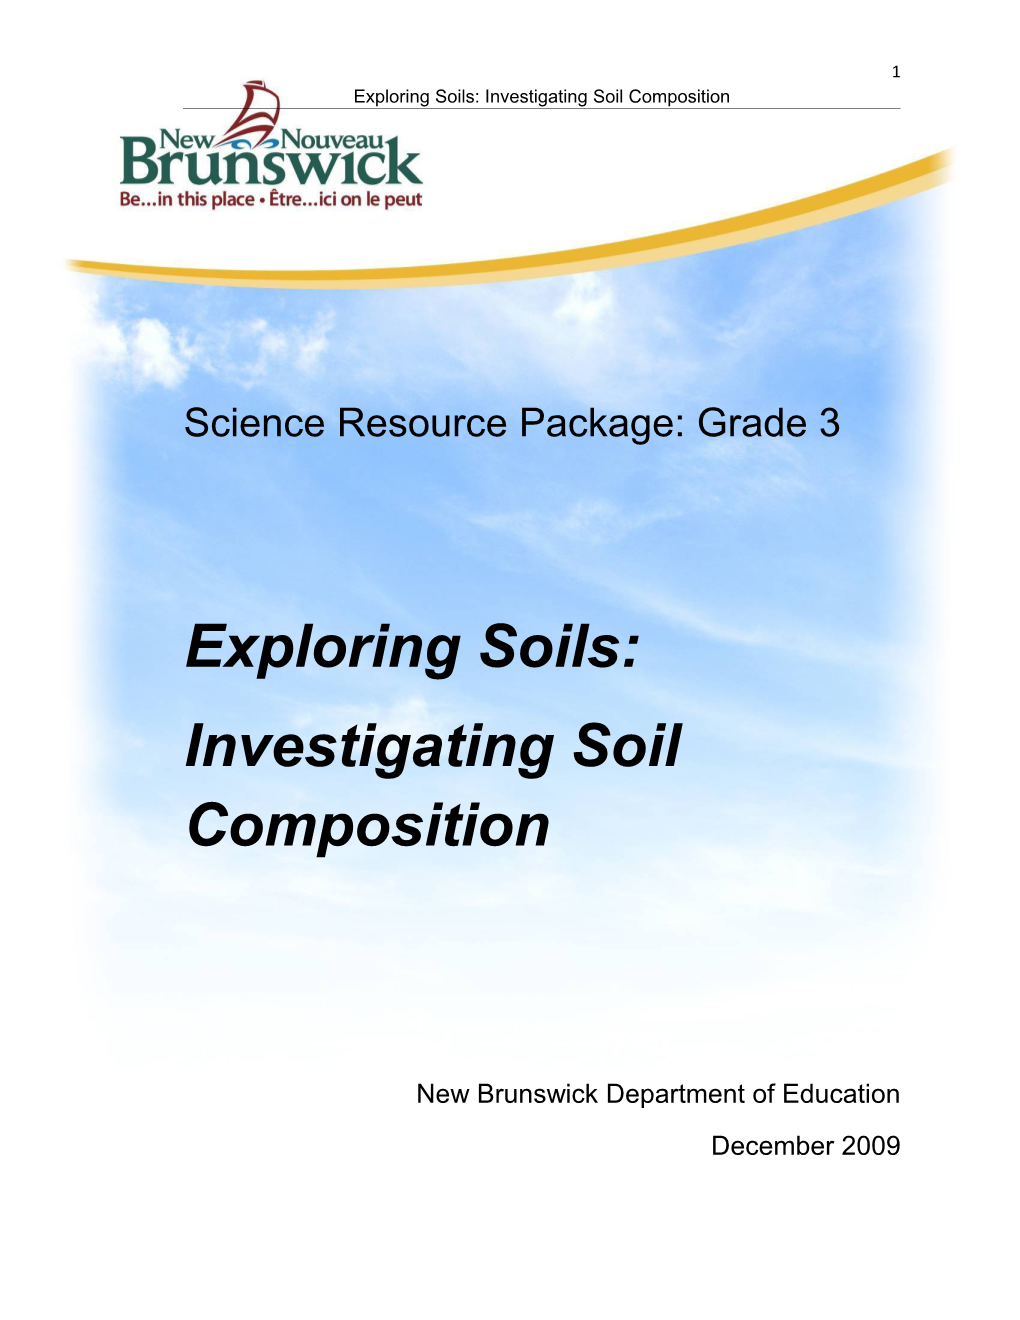 Exploring Soils - Investigating Soil Composition